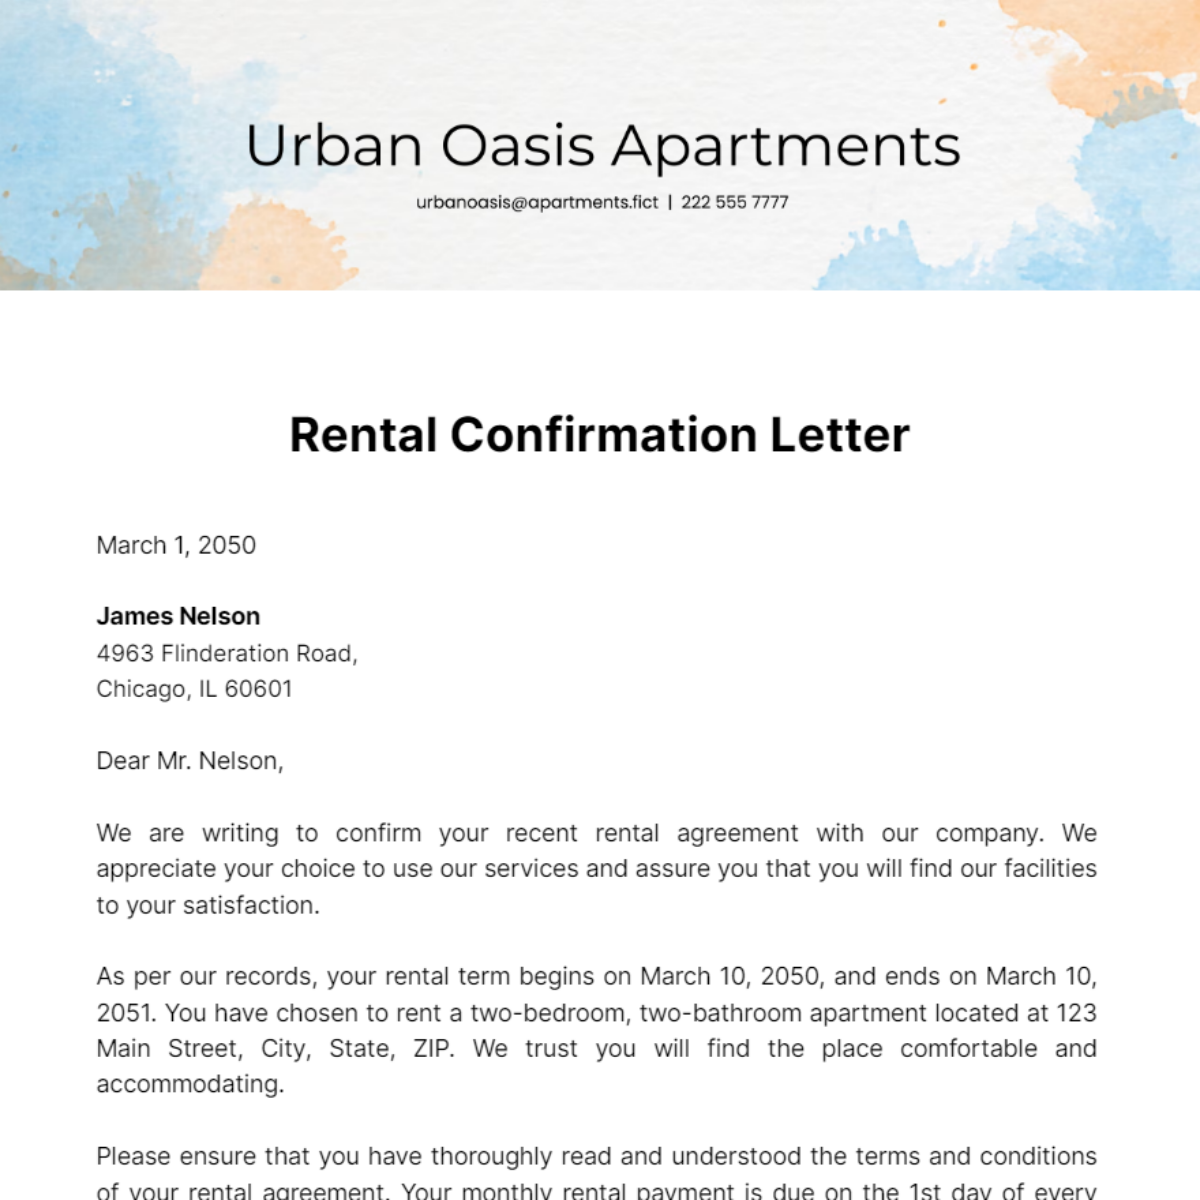 Rental Confirmation Letter Template